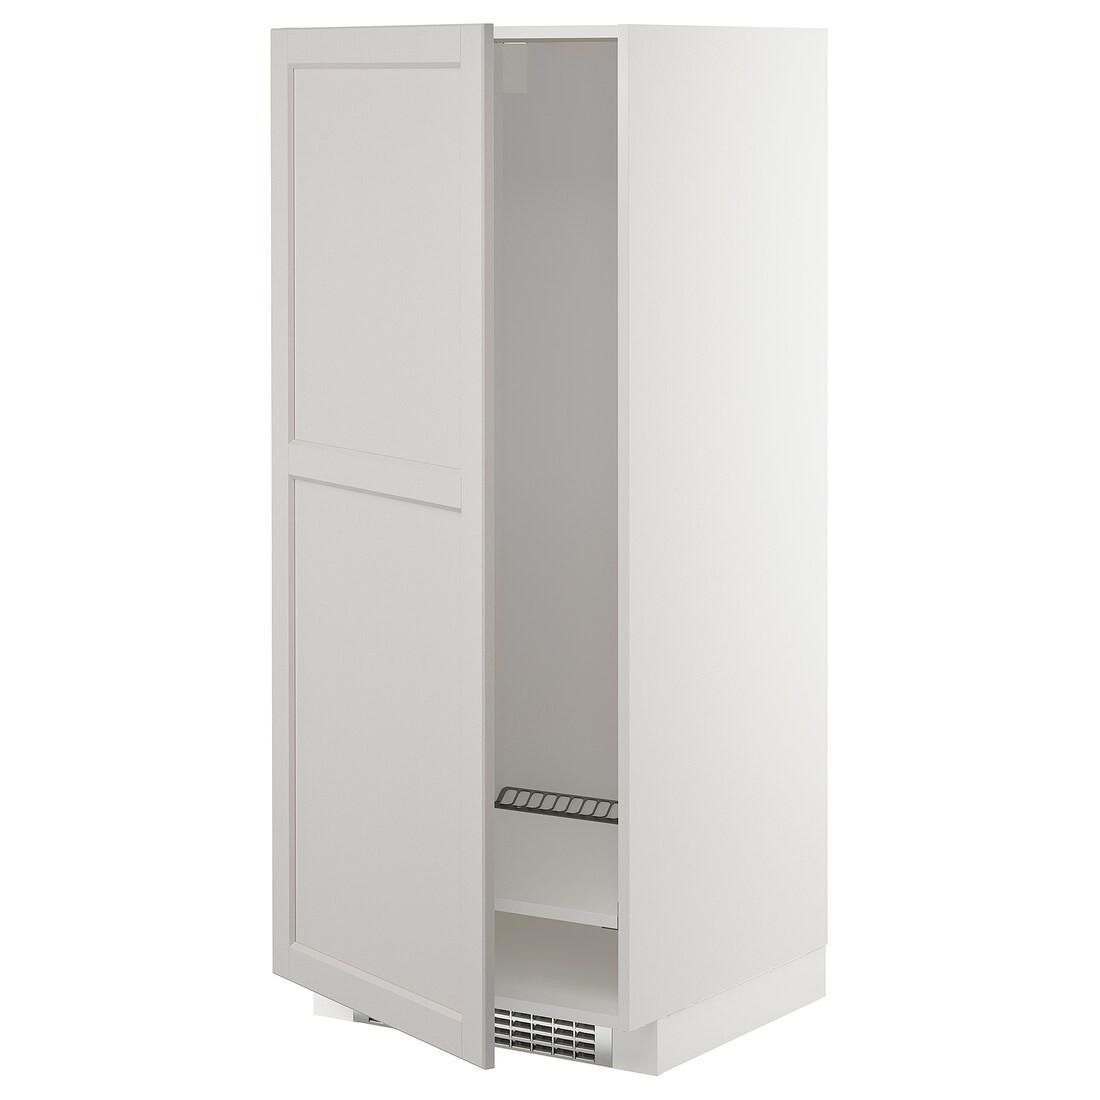 METOD МЕТОД Высокий шкаф для холодильника / морозильника, белый / Lerhyttan светло-серый, 60x60x140 см